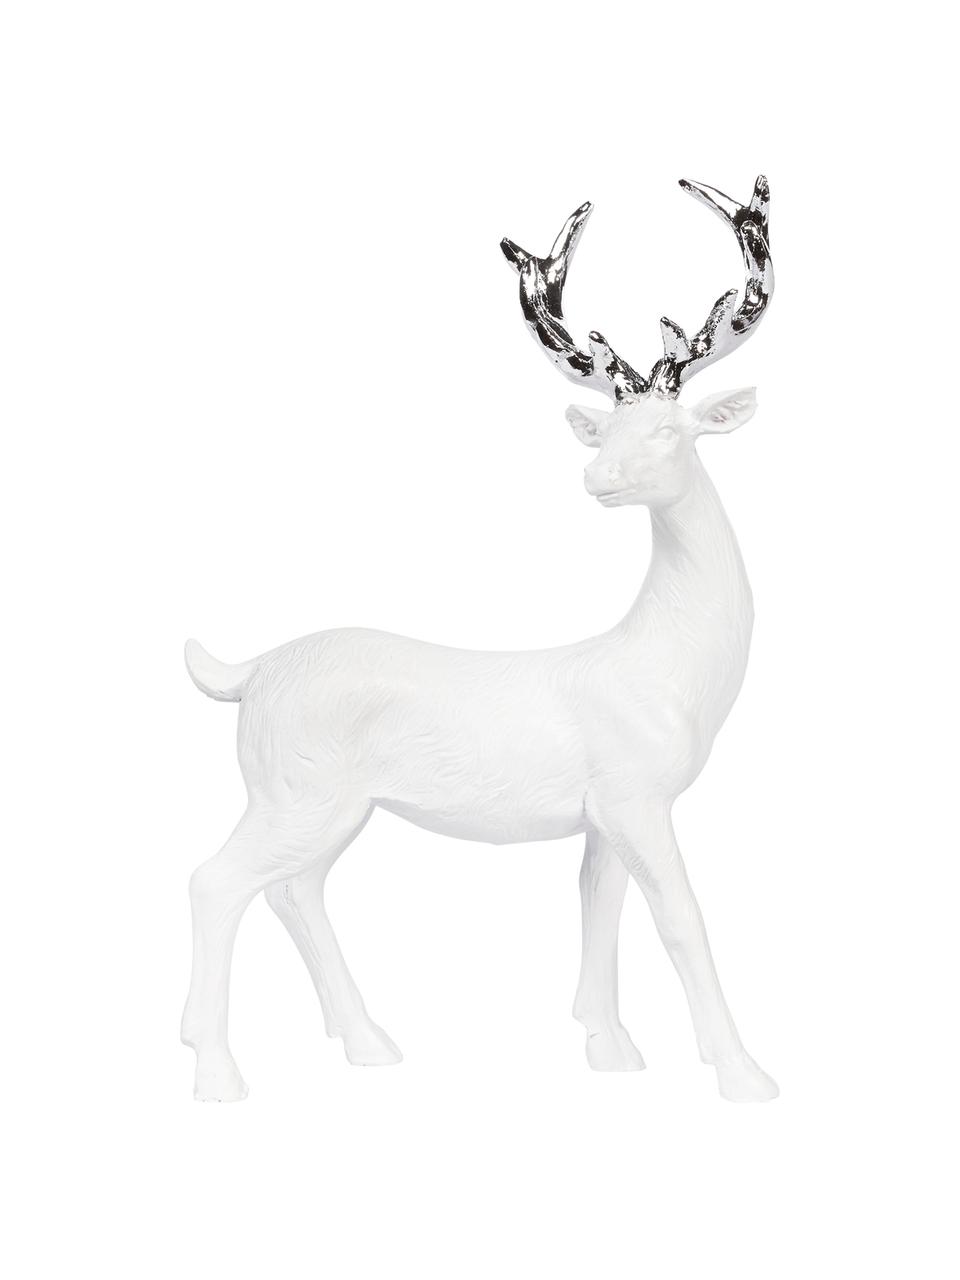 Oggetto decorativo fatto a mano Deer, Poliresina, Bianco, argentato, Larg. 9 x Alt. 14 cm